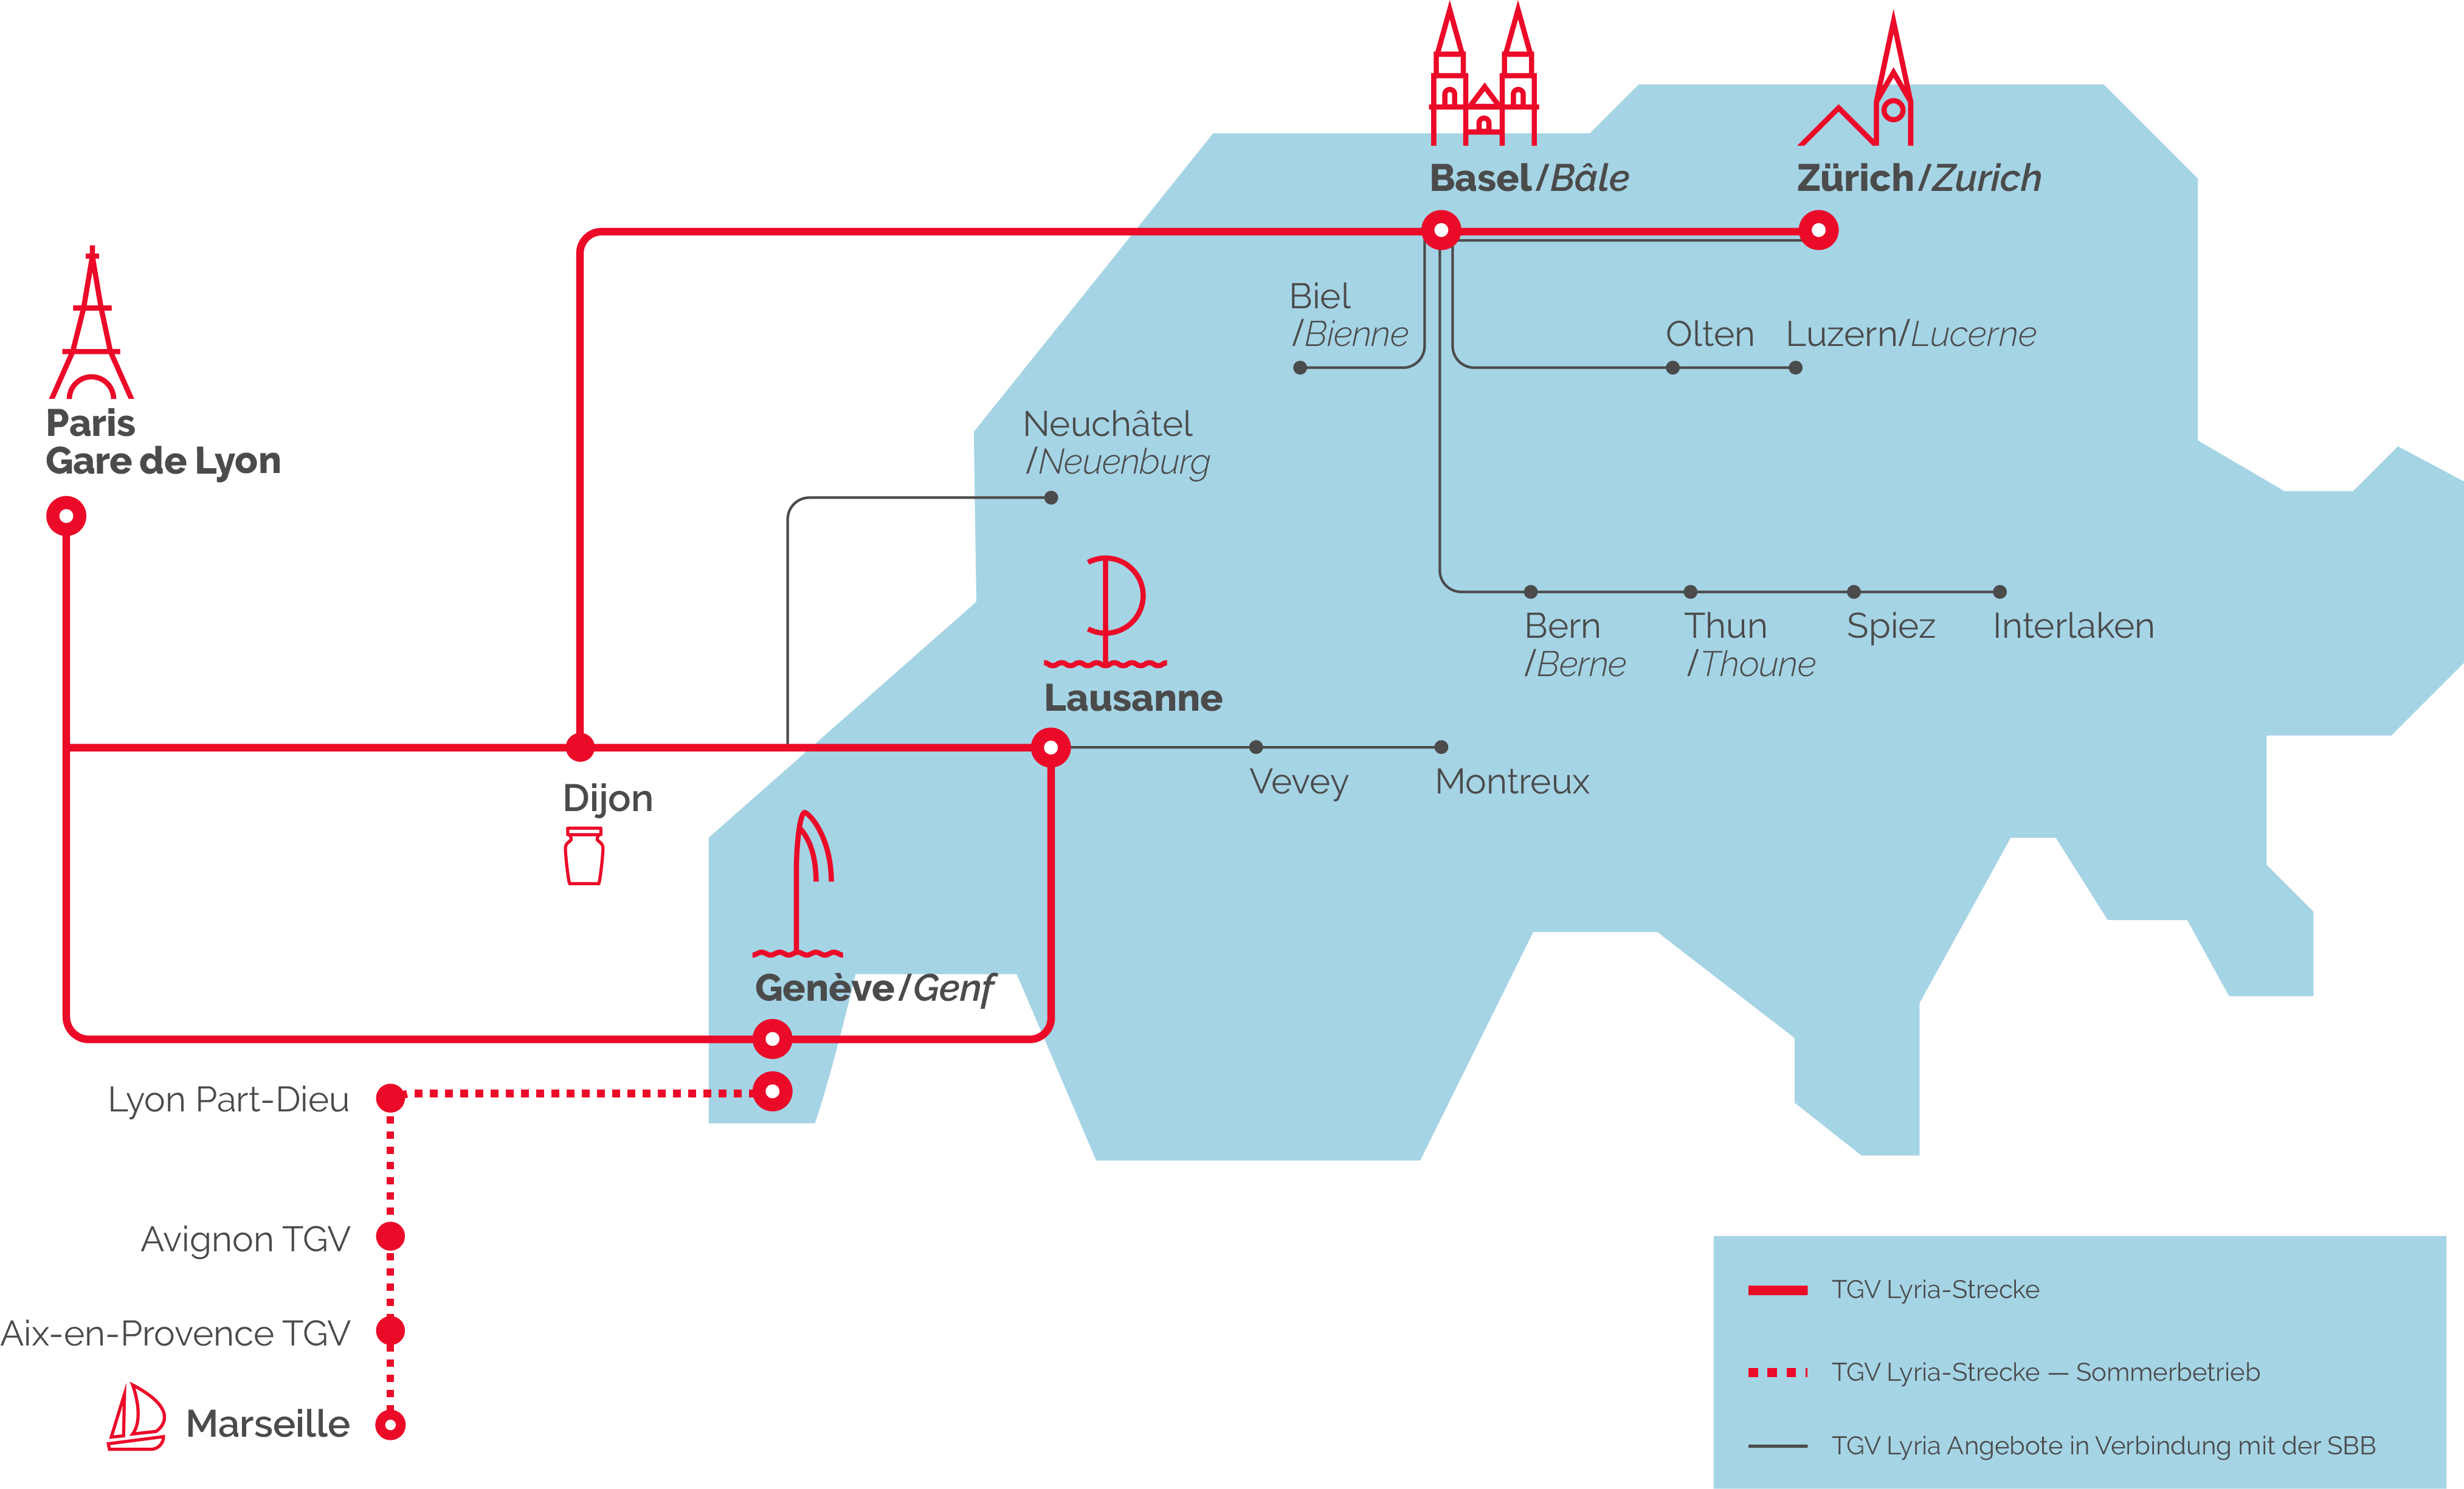 The TGV Lyria network map